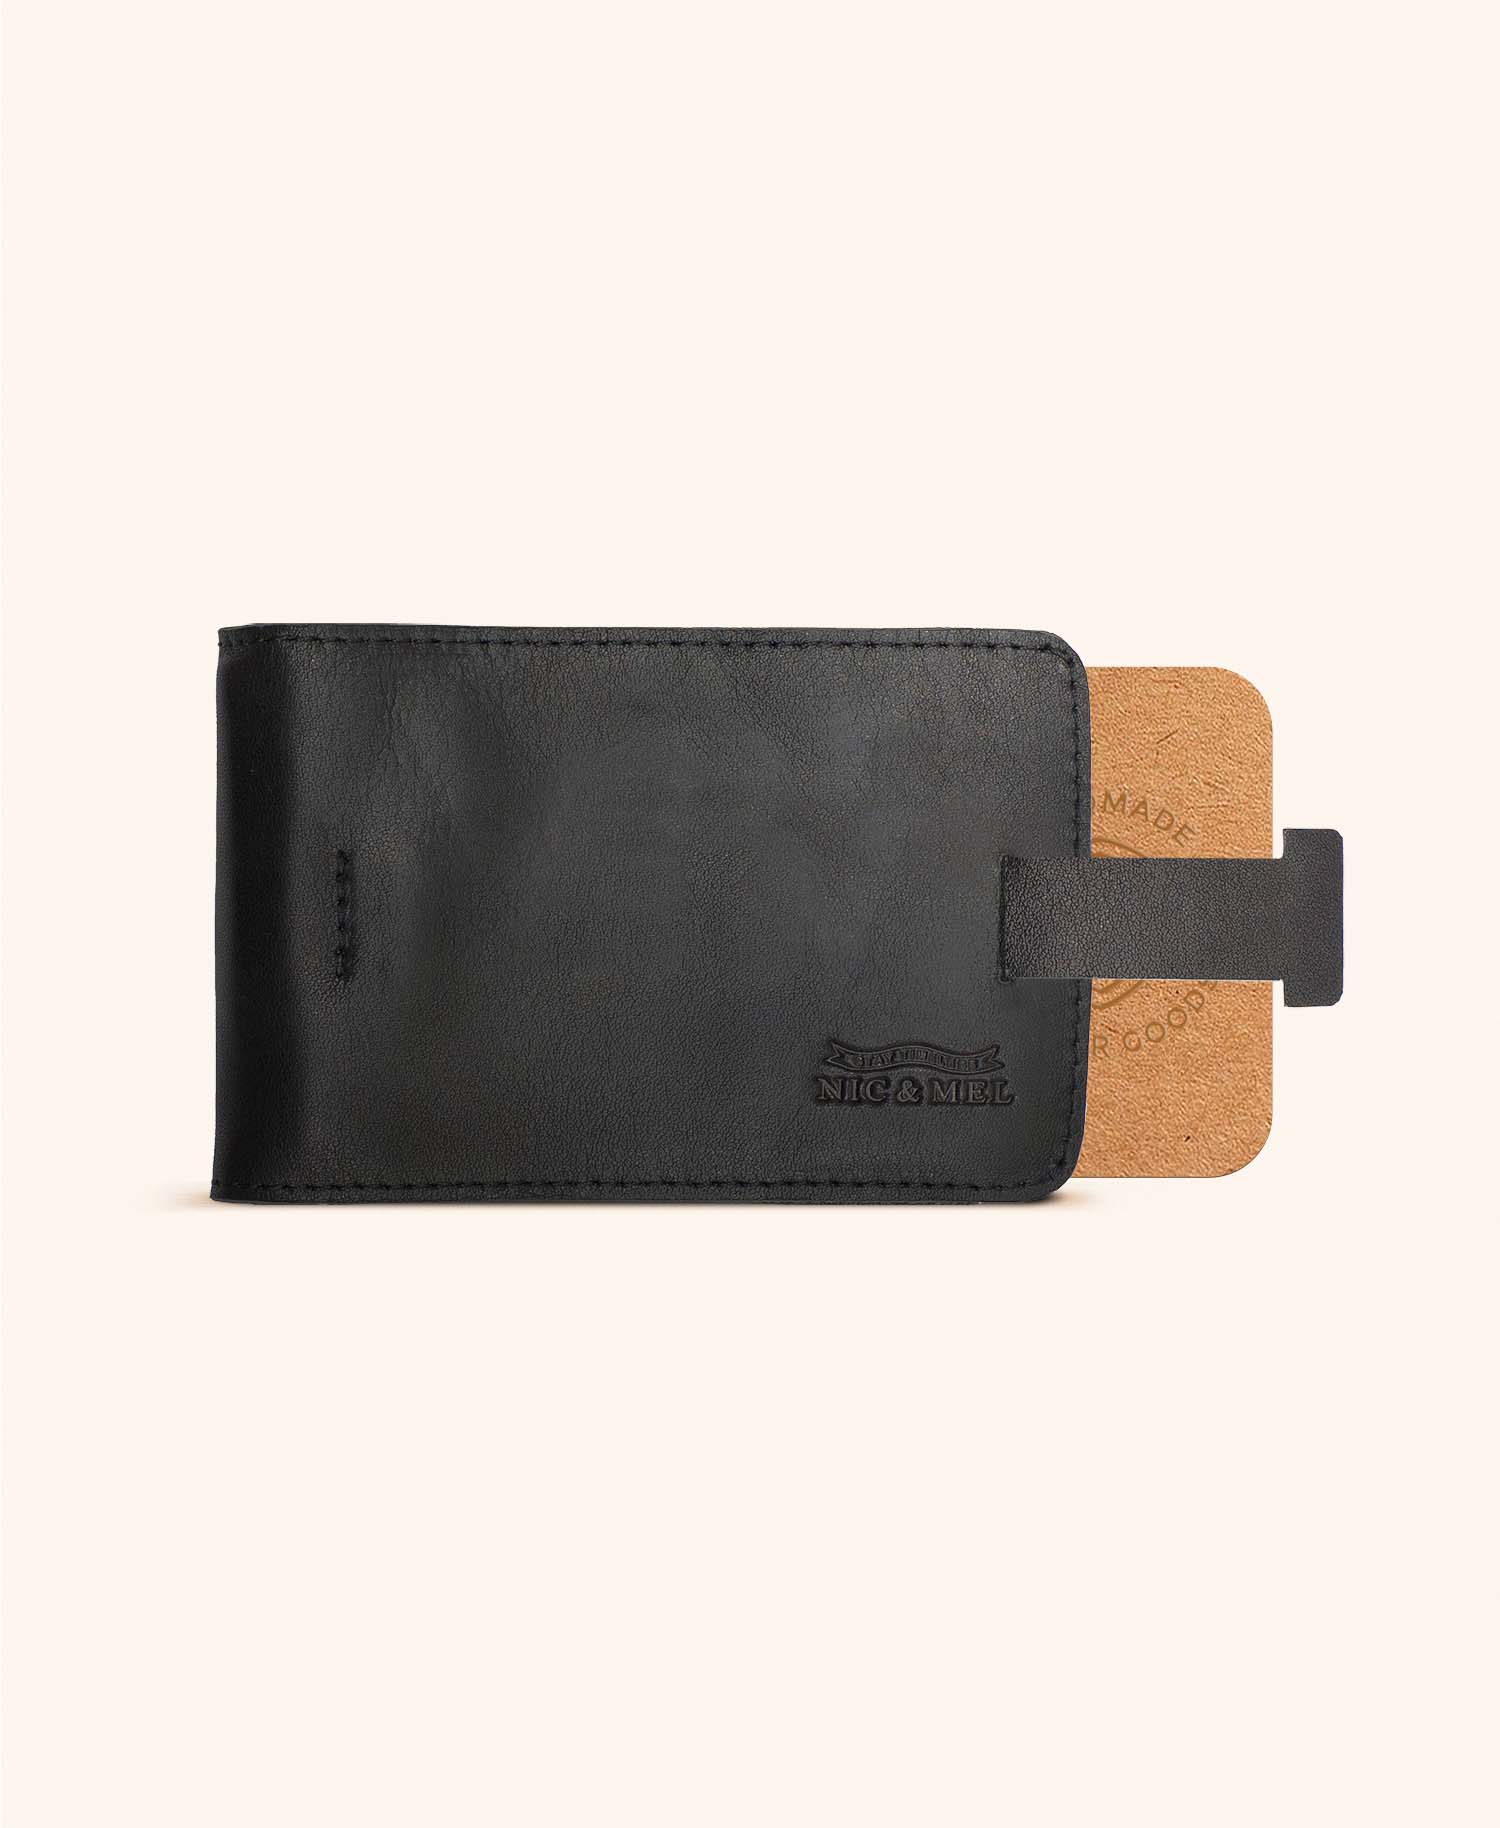 floyd card holder black leather w_ money clip open